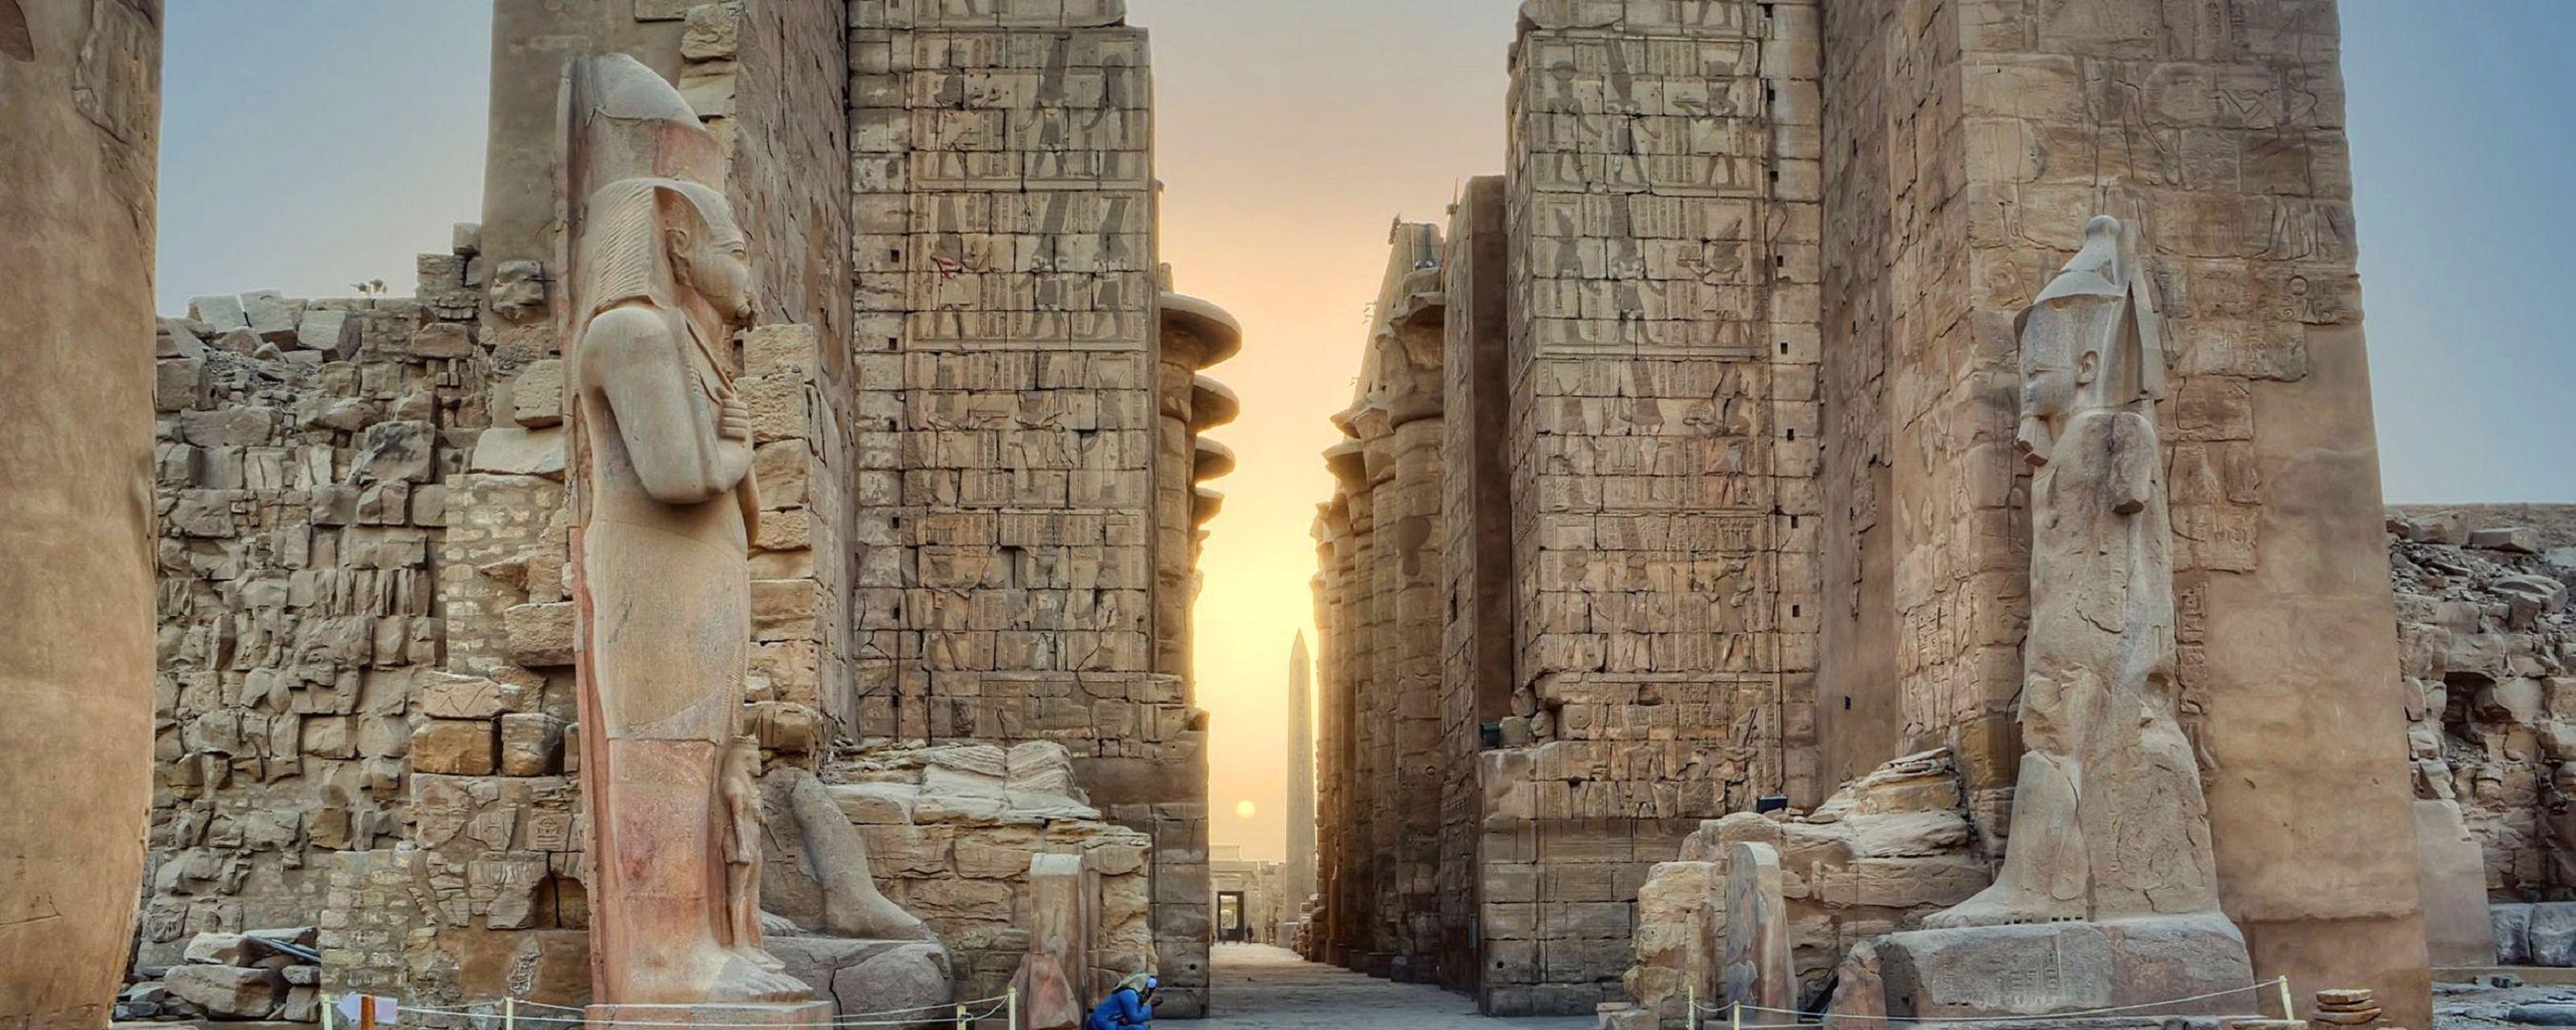 Luxor Temple Egypt, Ancient marvel, Architectural splendor, Historical significance, 2700x1080 Dual Screen Desktop